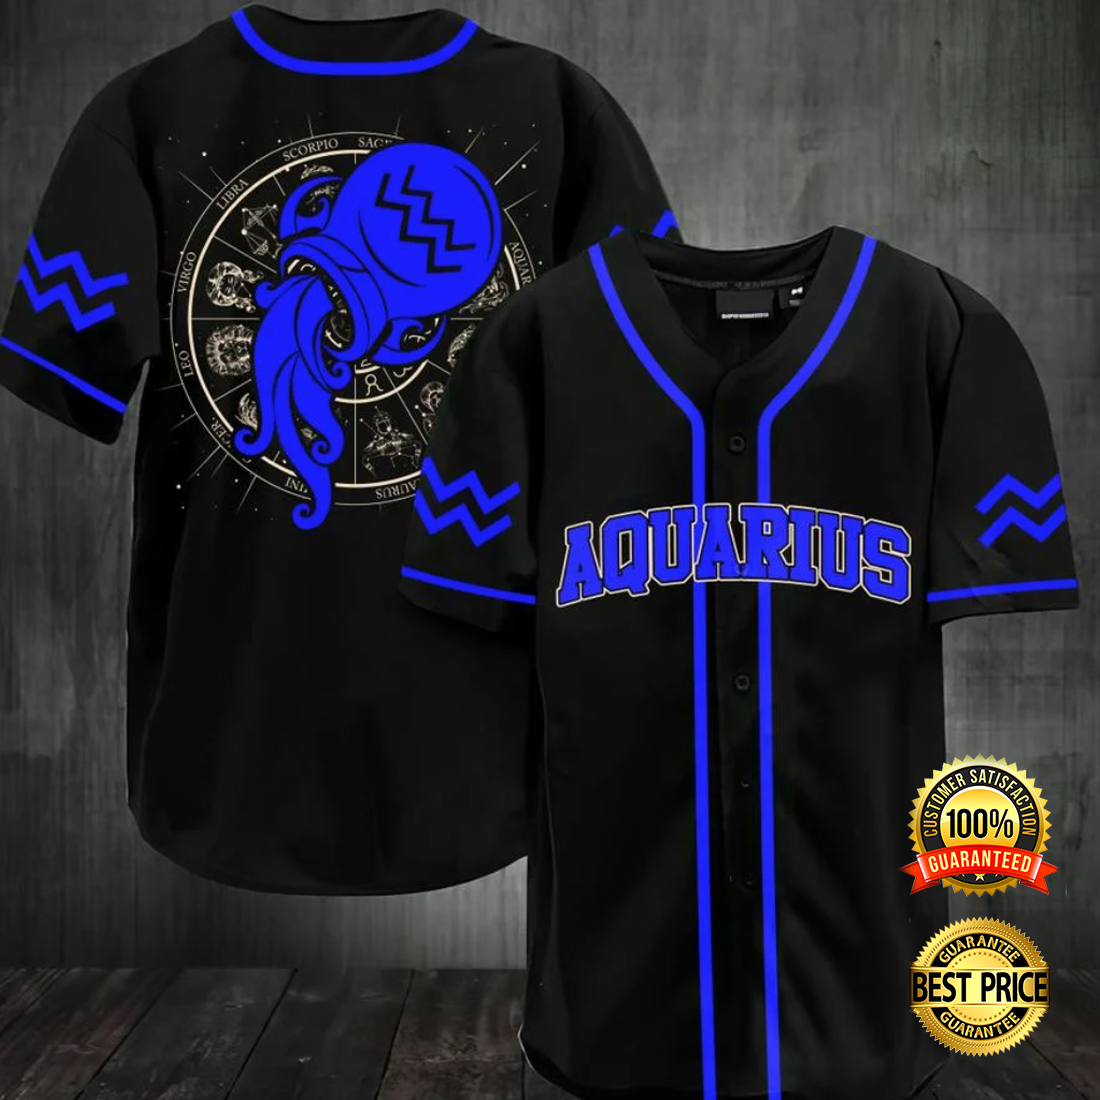 Aquarius baseball jersey